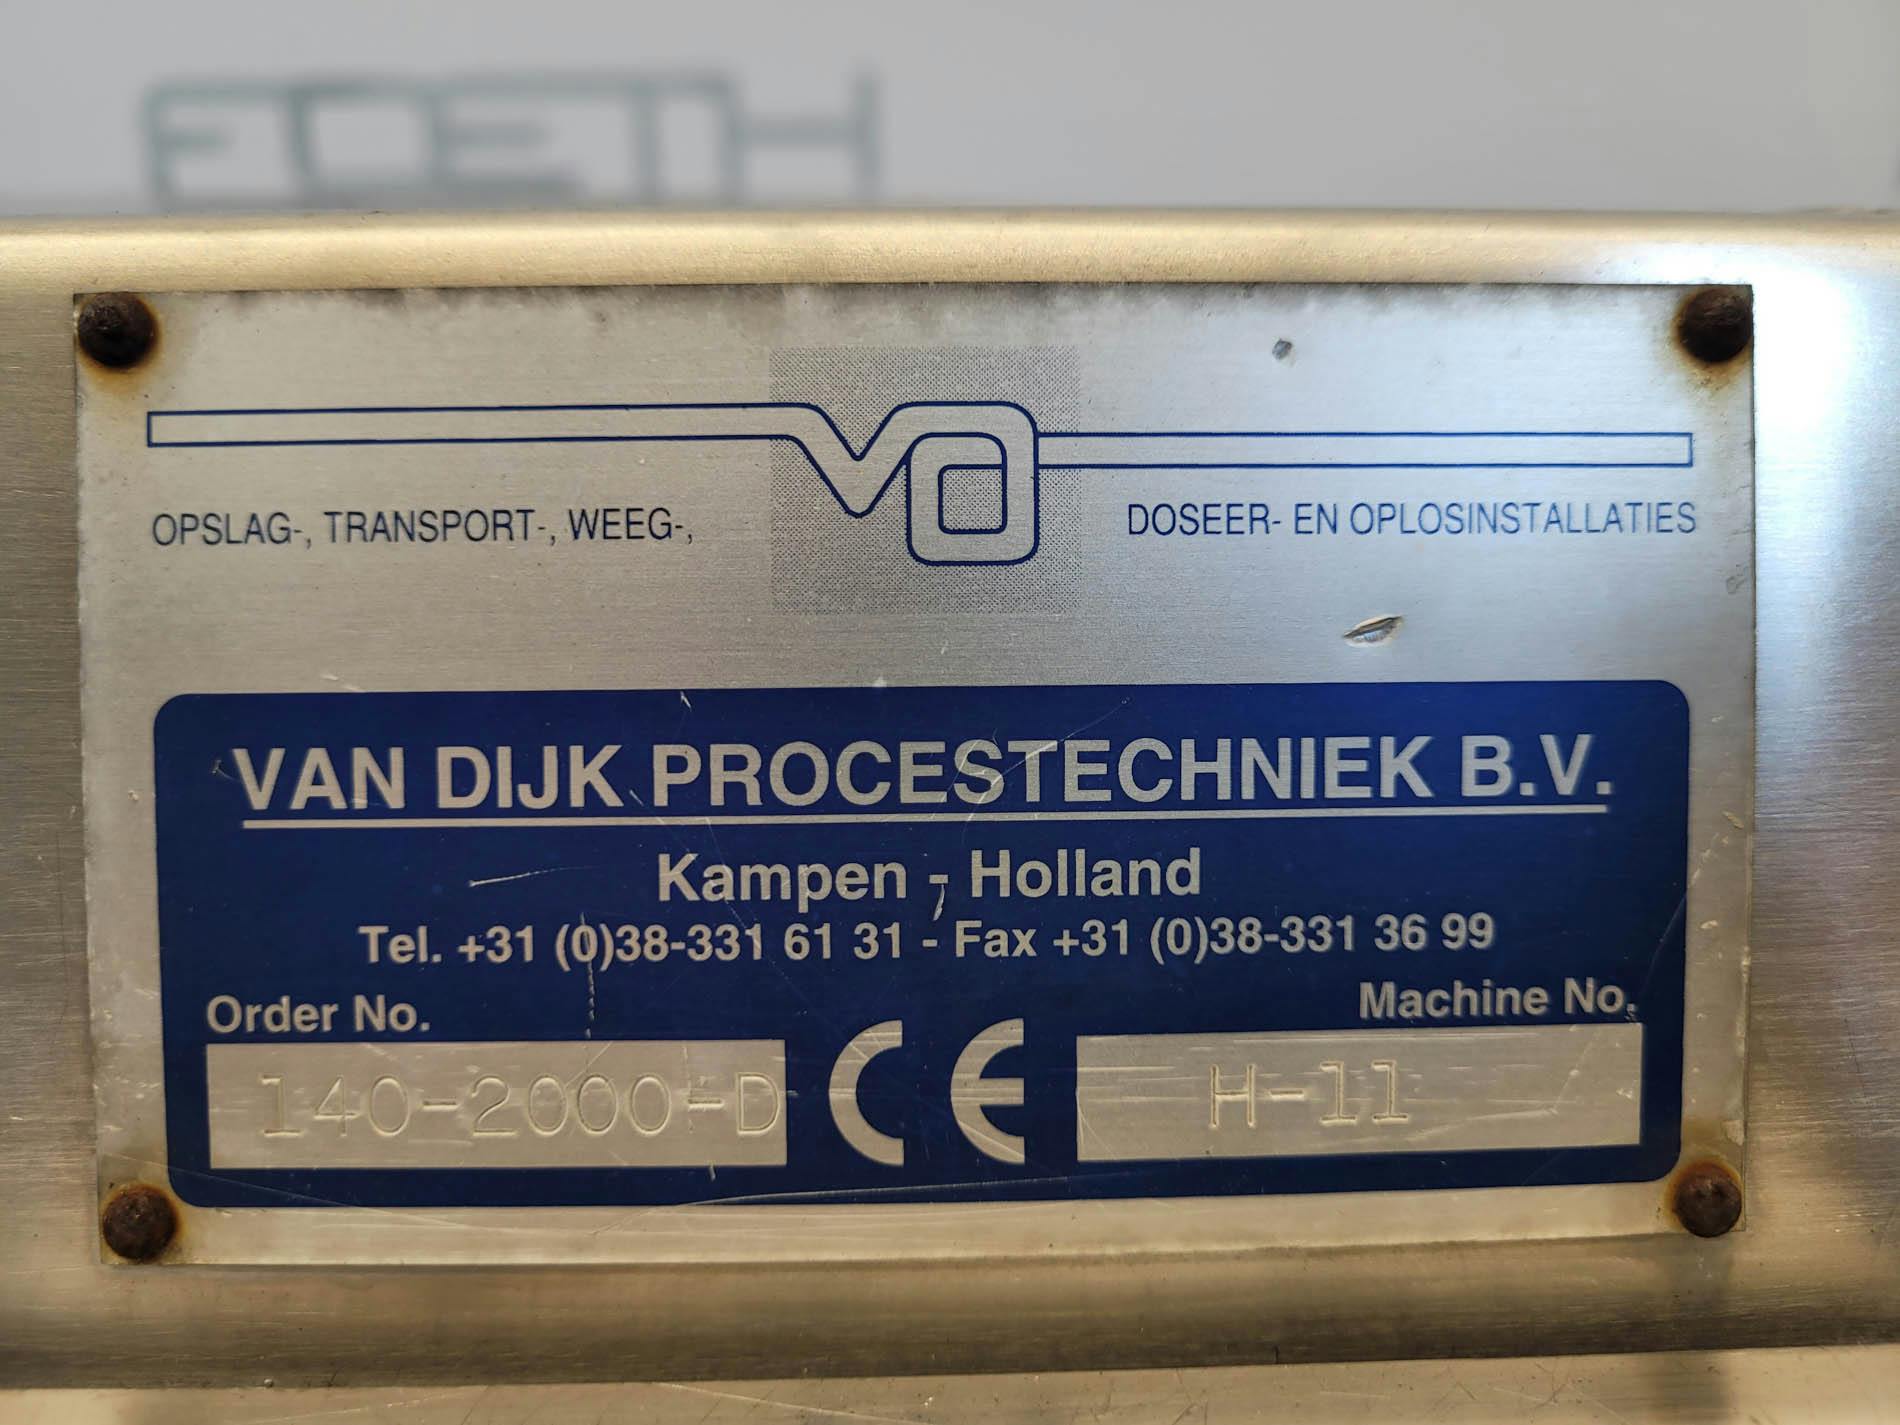 Van Dijk Procestechniek H-11 - Estação de despejo de sacos	 - image 14